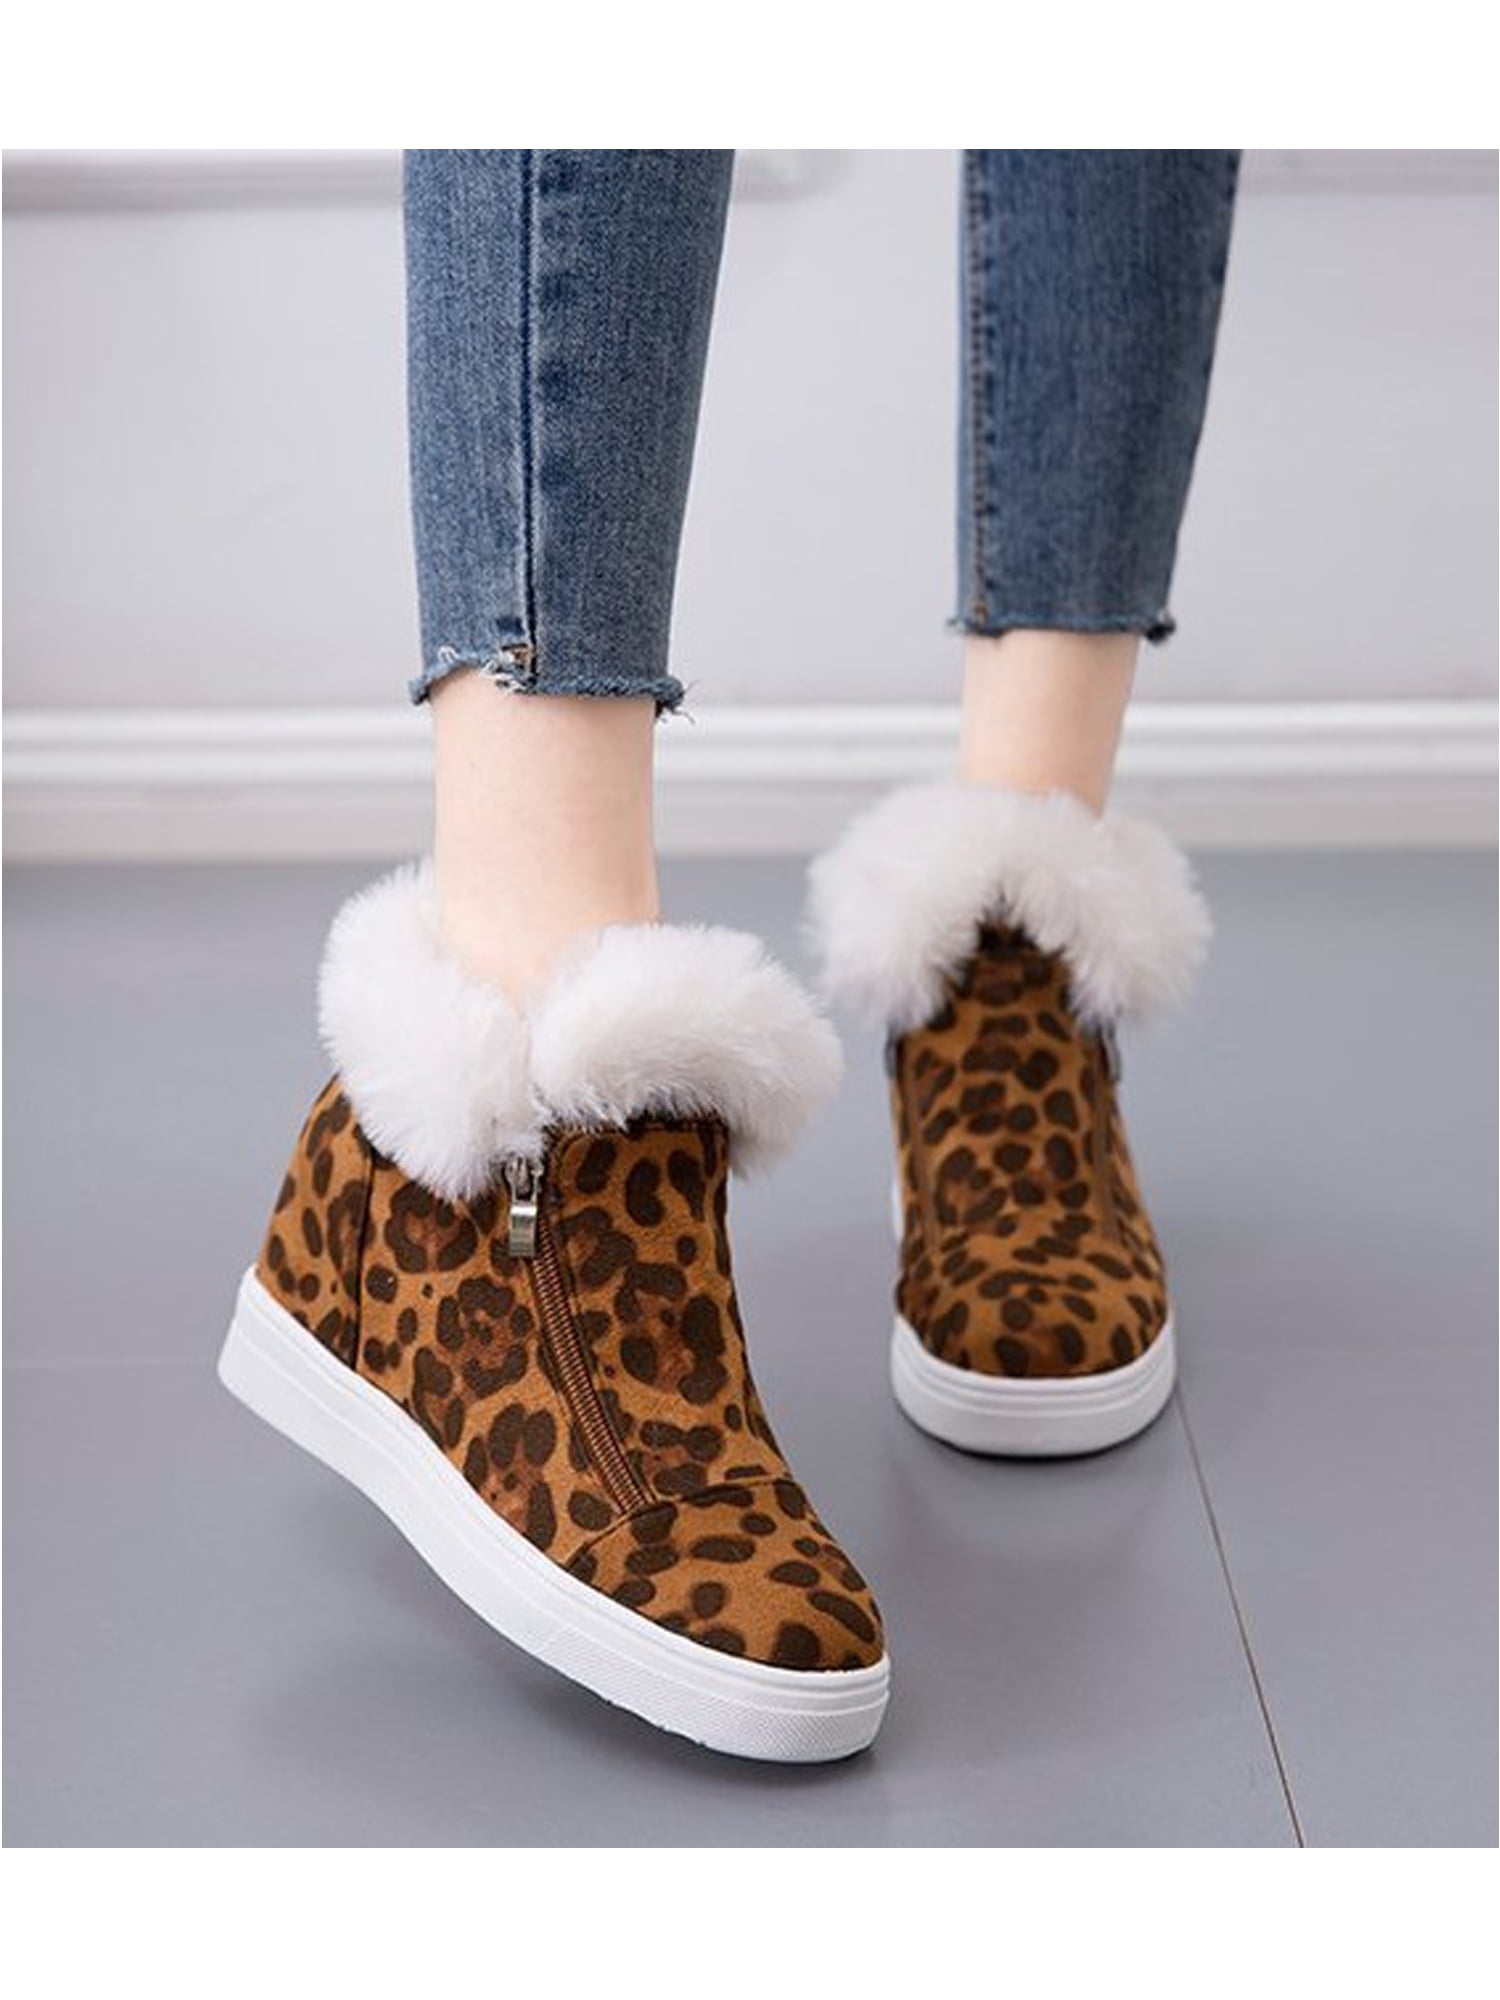 Women's casual Warm Fur furry  hidden Heels faux suede Snow Ankle Boots Shoes 